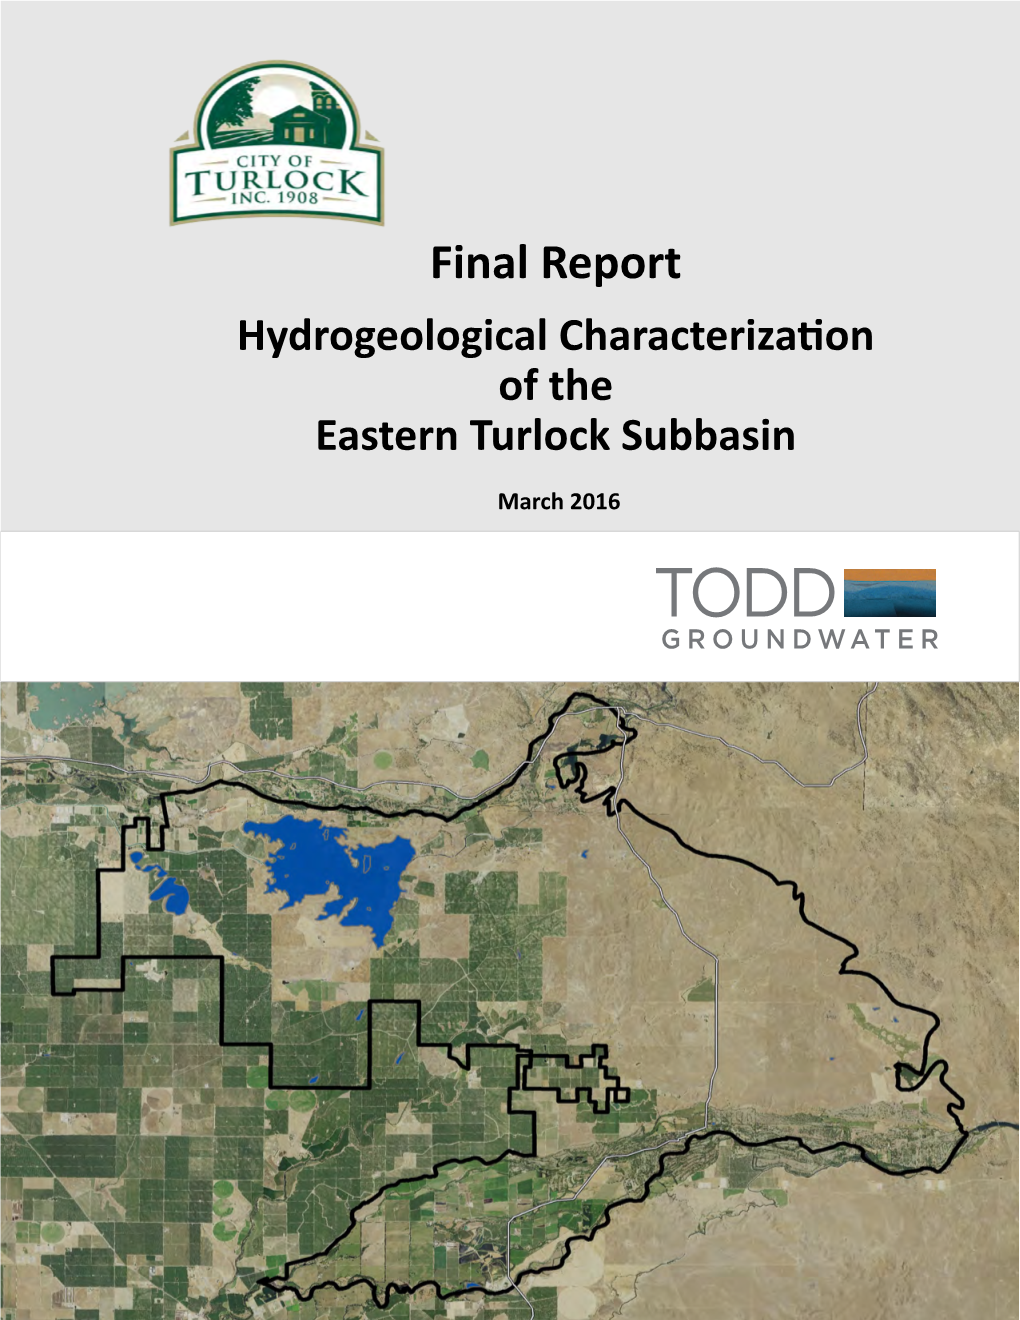 Hydrogeological Characterization of the Eastern Turlock Subbasin